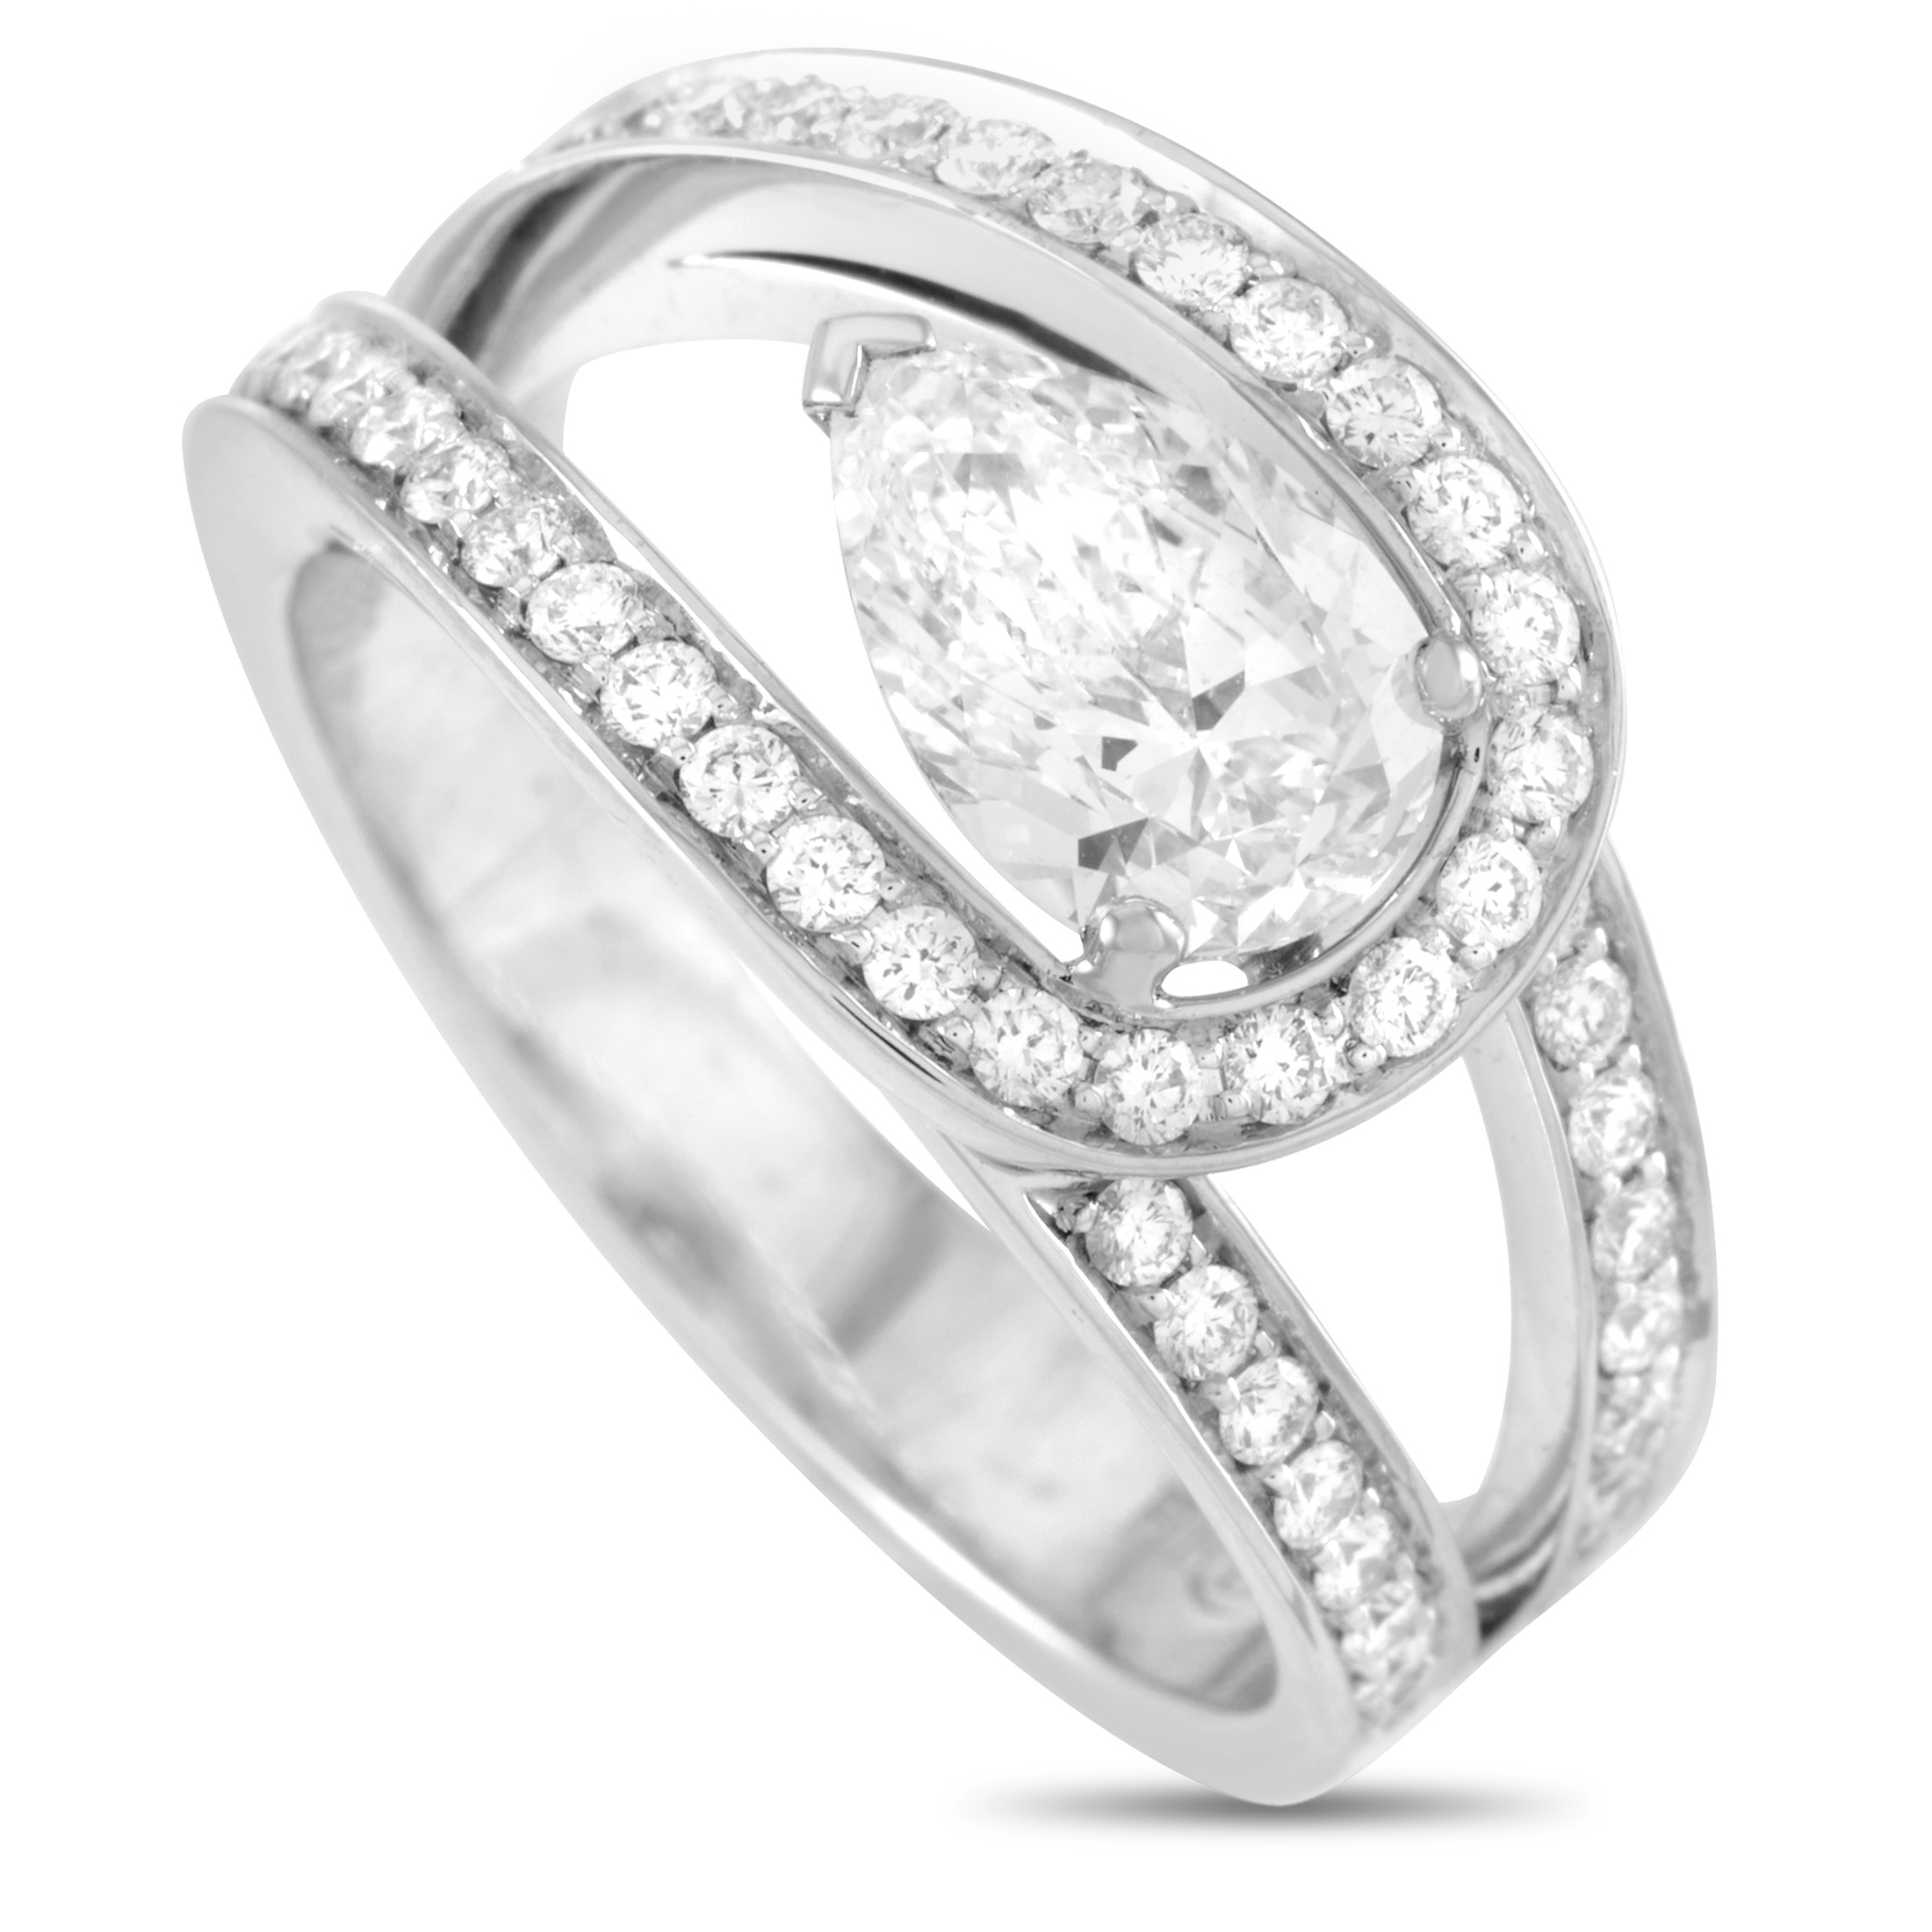 Fred of Paris Lovelight Platinum and Diamond Ring